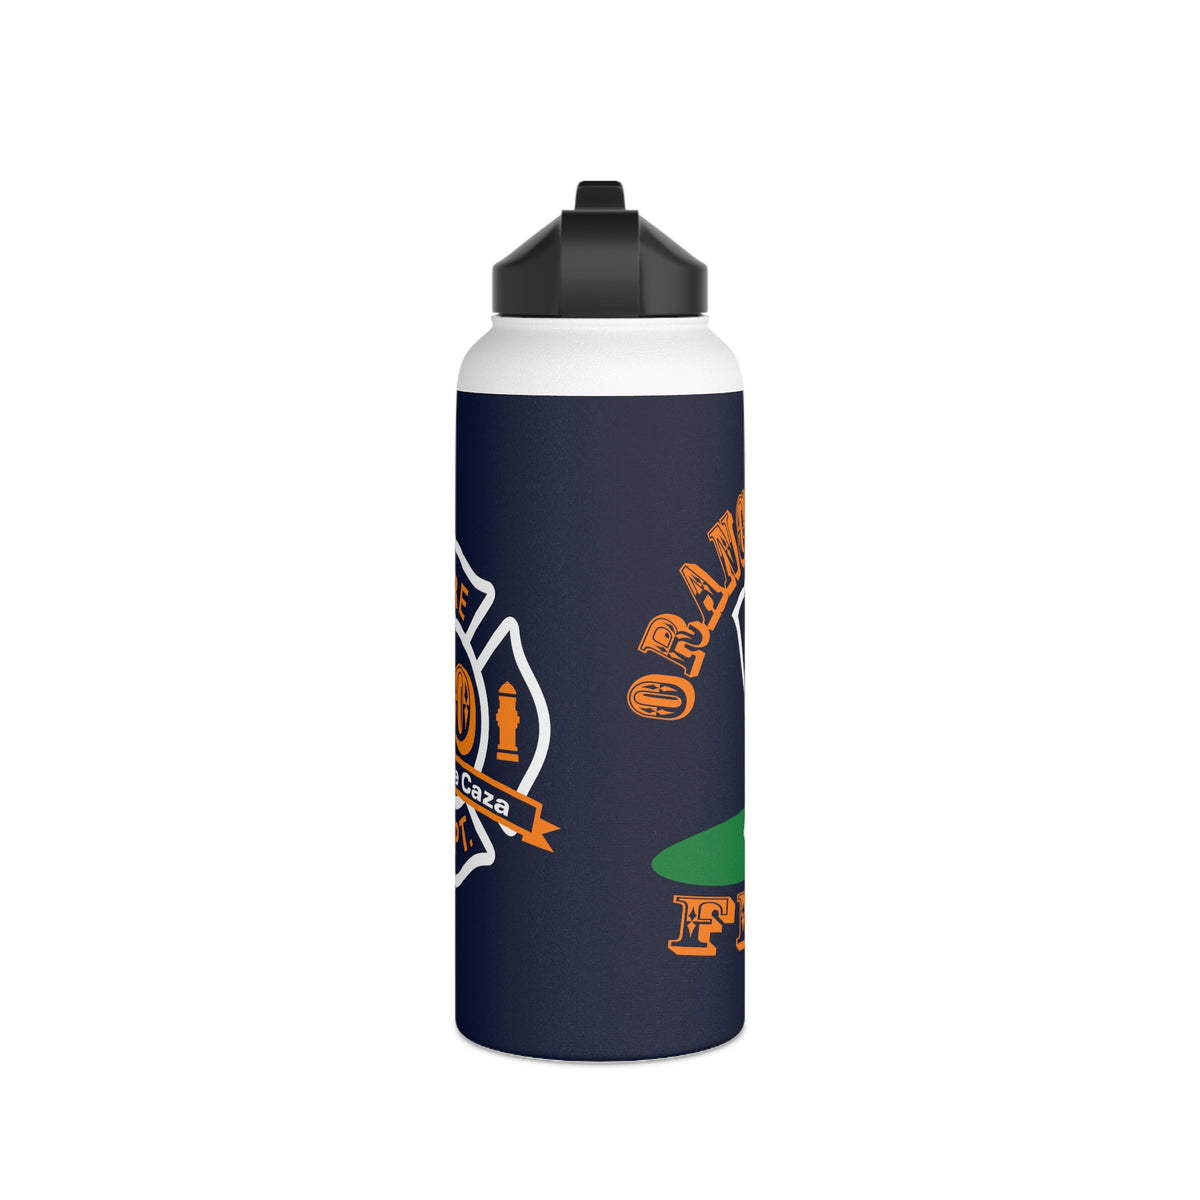 BodyForge Sports Water Bottle - 24oz, 3 Lids & Straw Lid, Leak Proof  Stainless Steel Gym & Sport Bot…See more BodyForge Sports Water Bottle -  24oz, 3